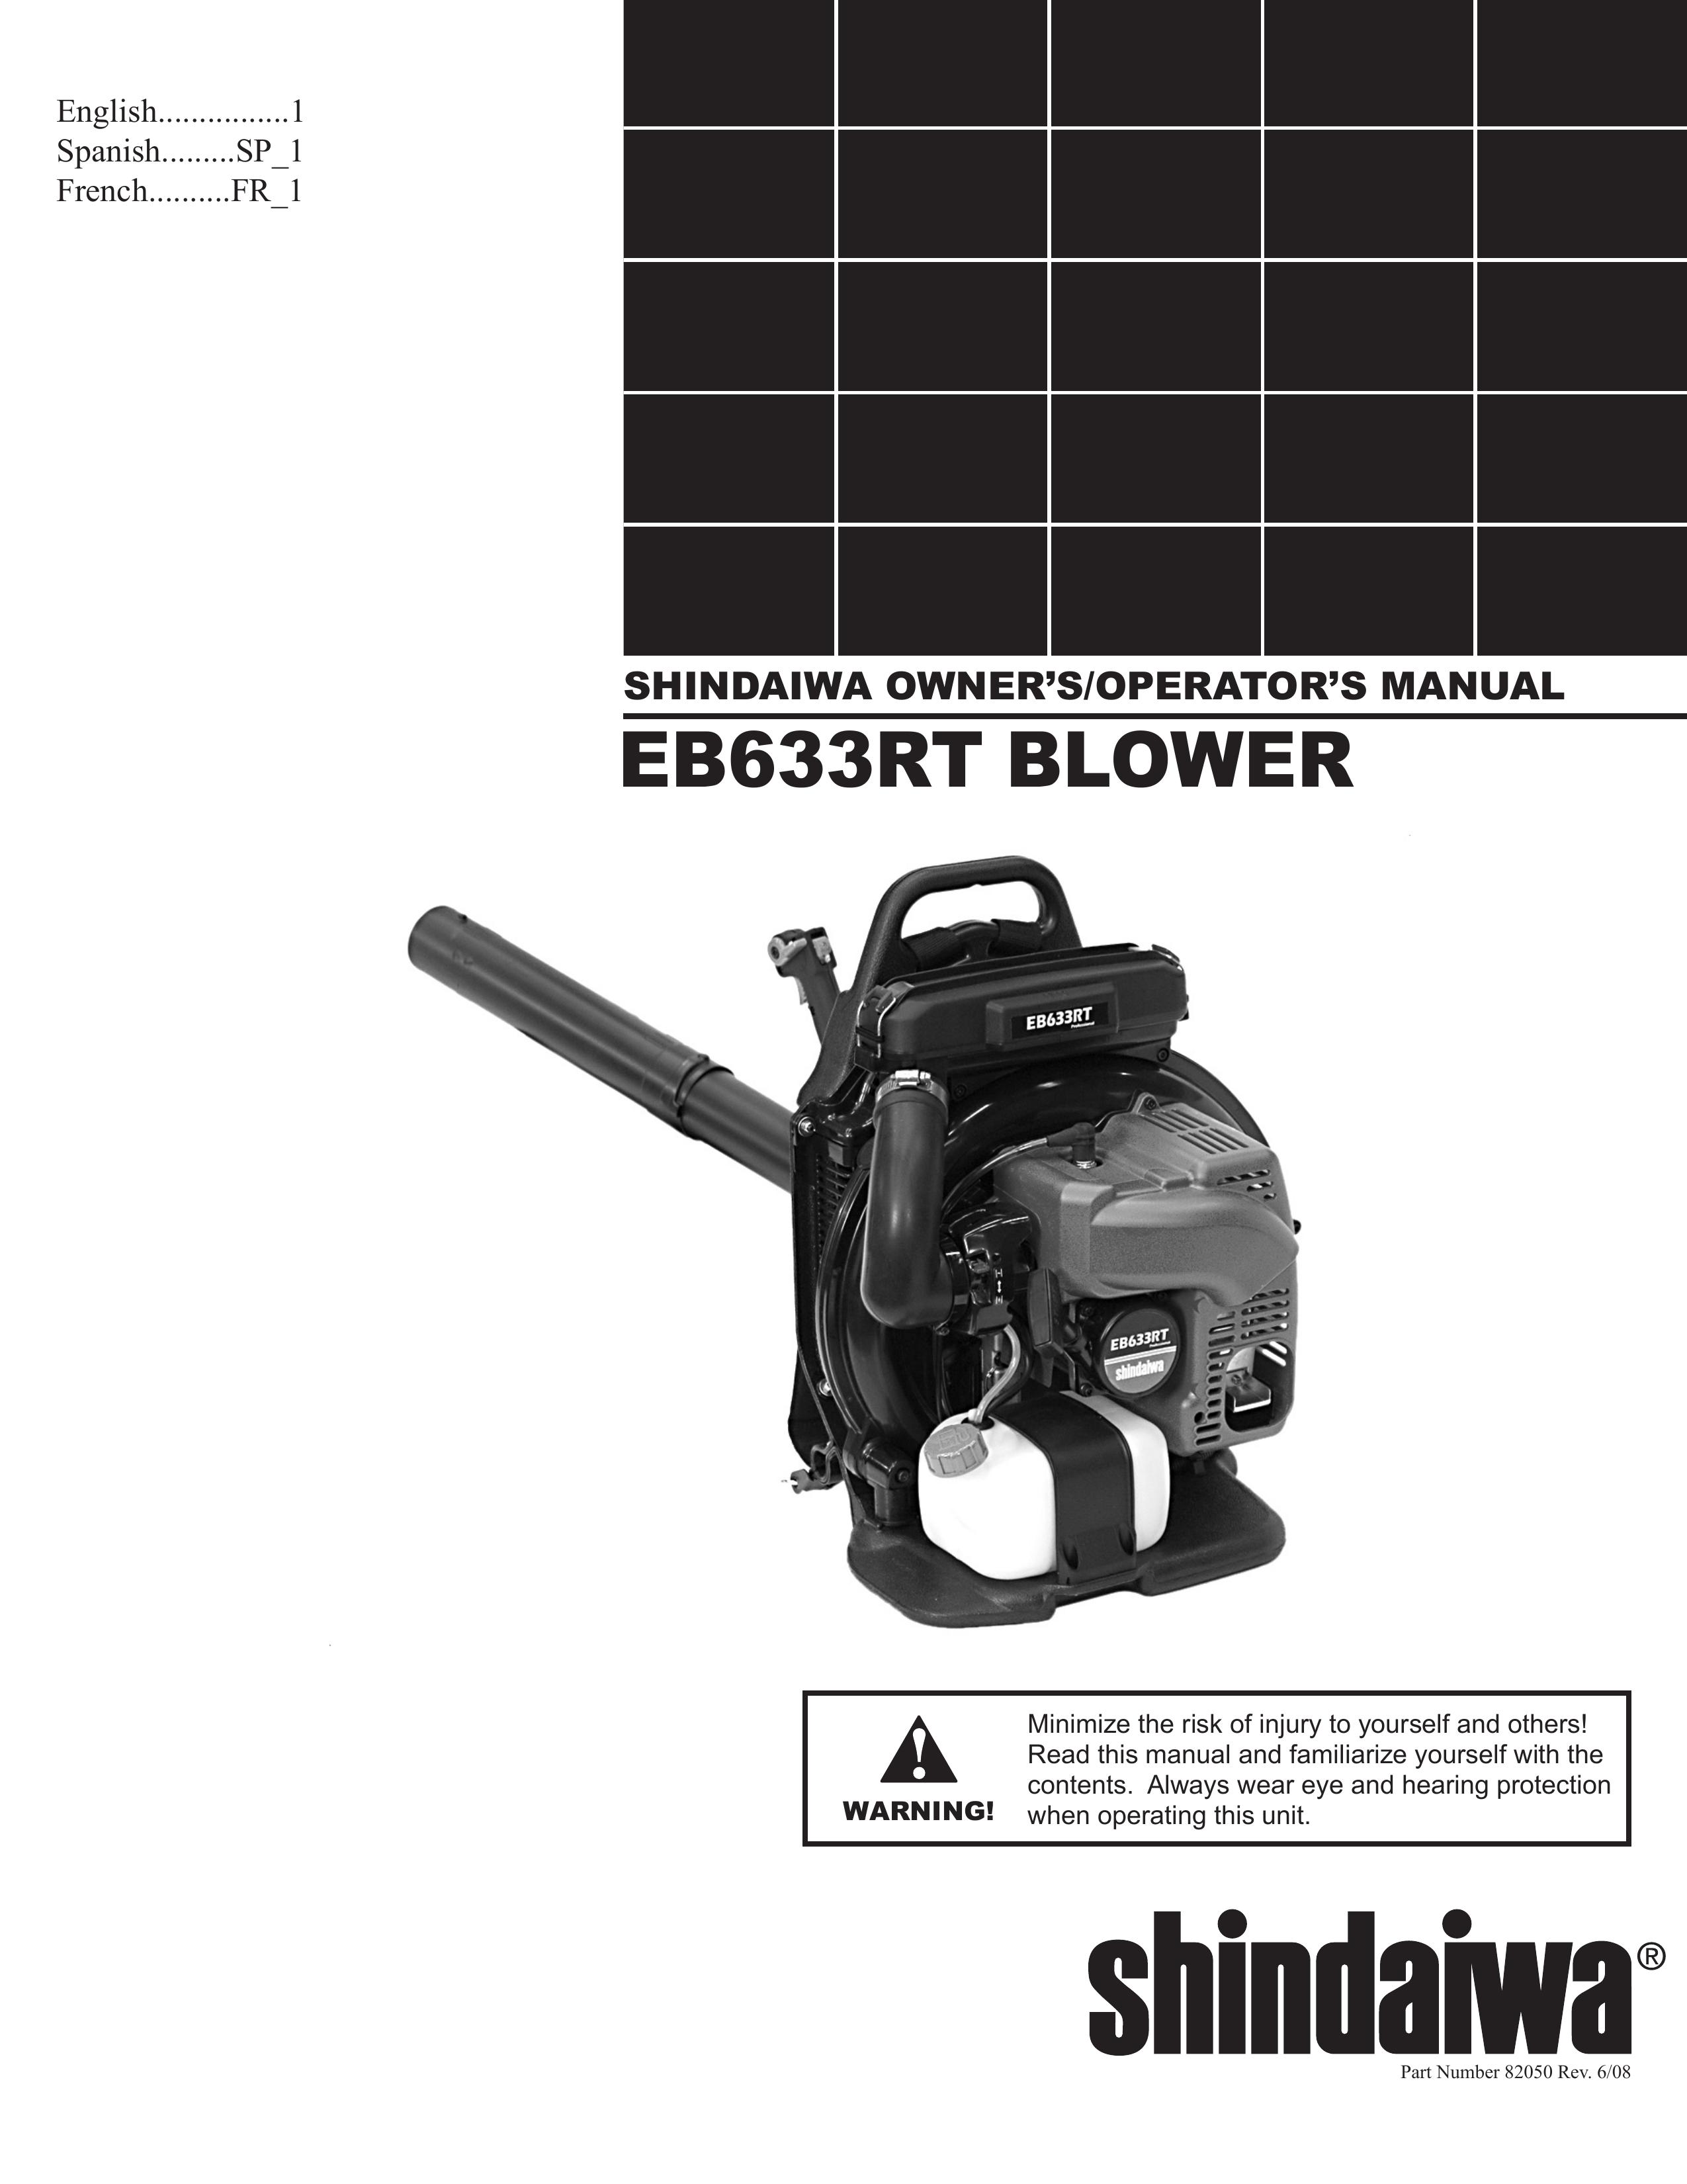 Shindaiwa 82050 Blower User Manual